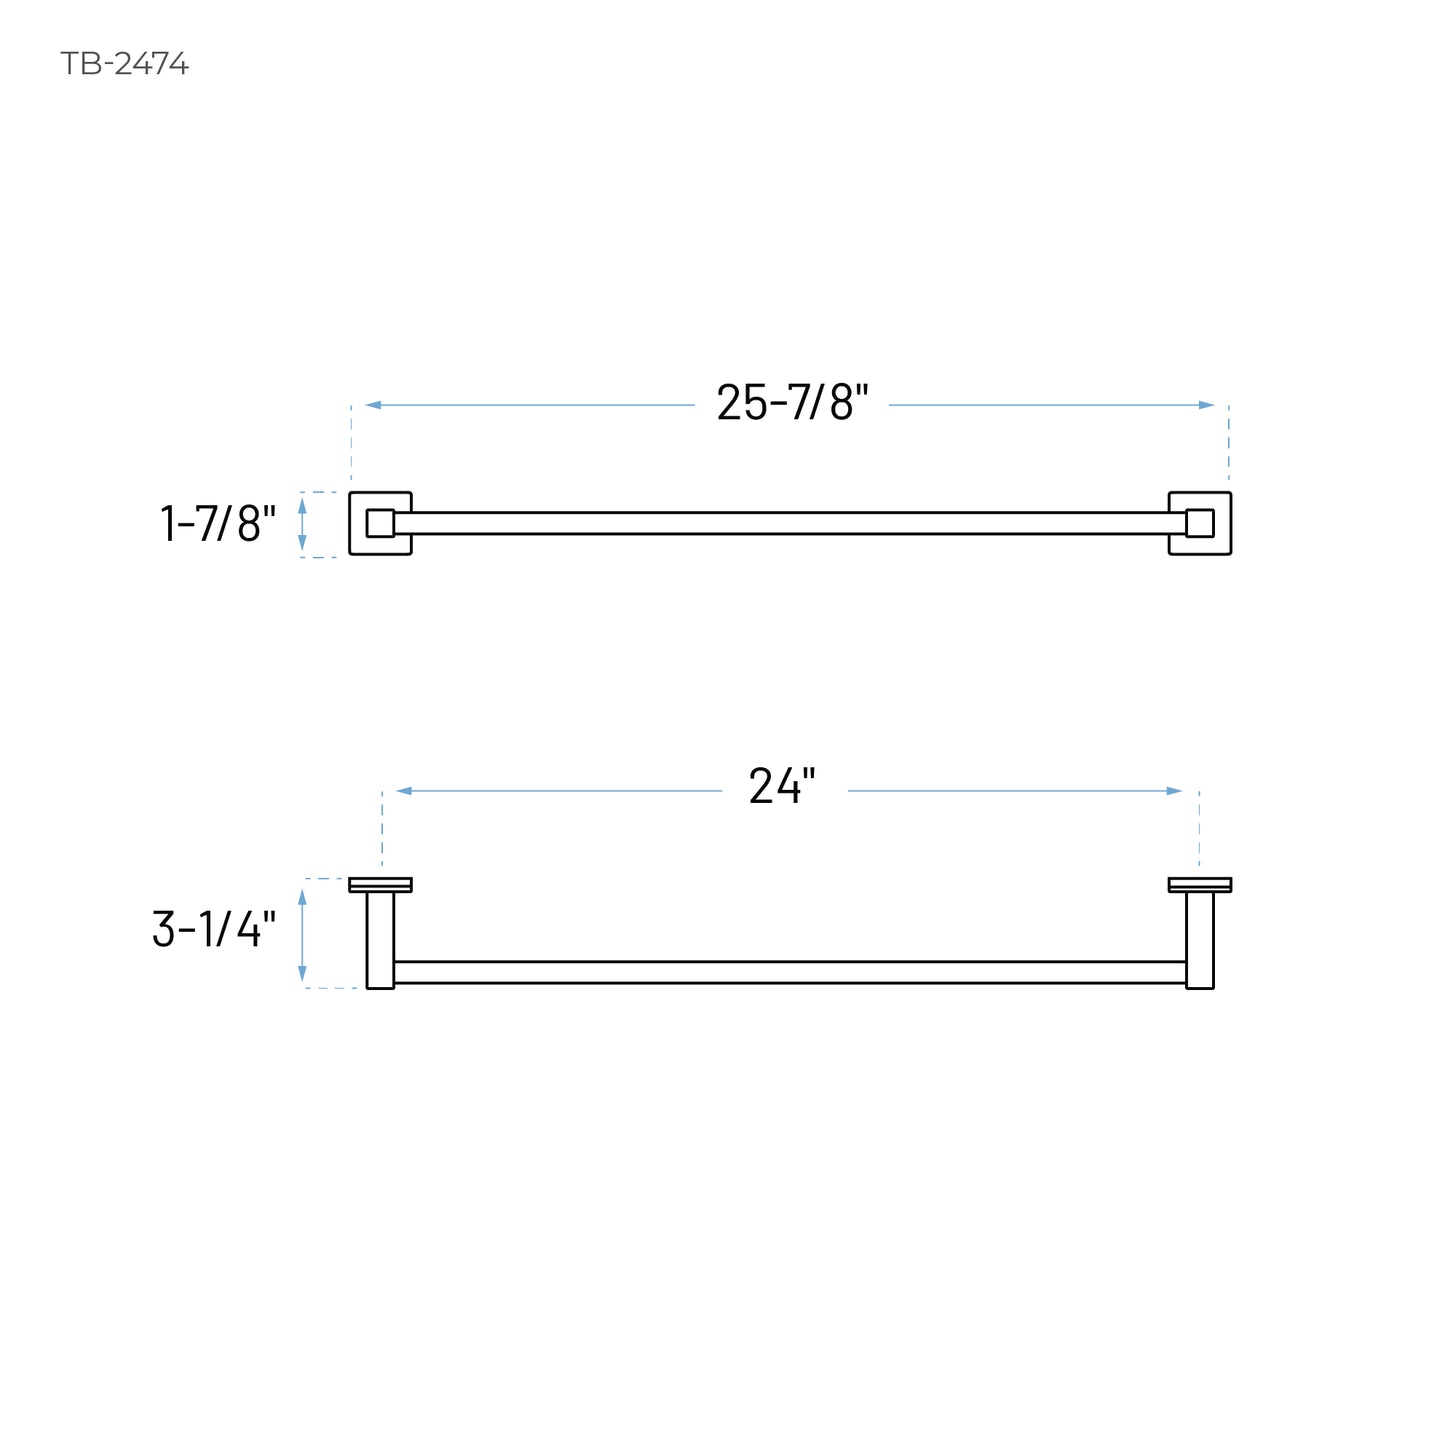 Technical Drawing of a 24-Inch Bathroom Towel Bar